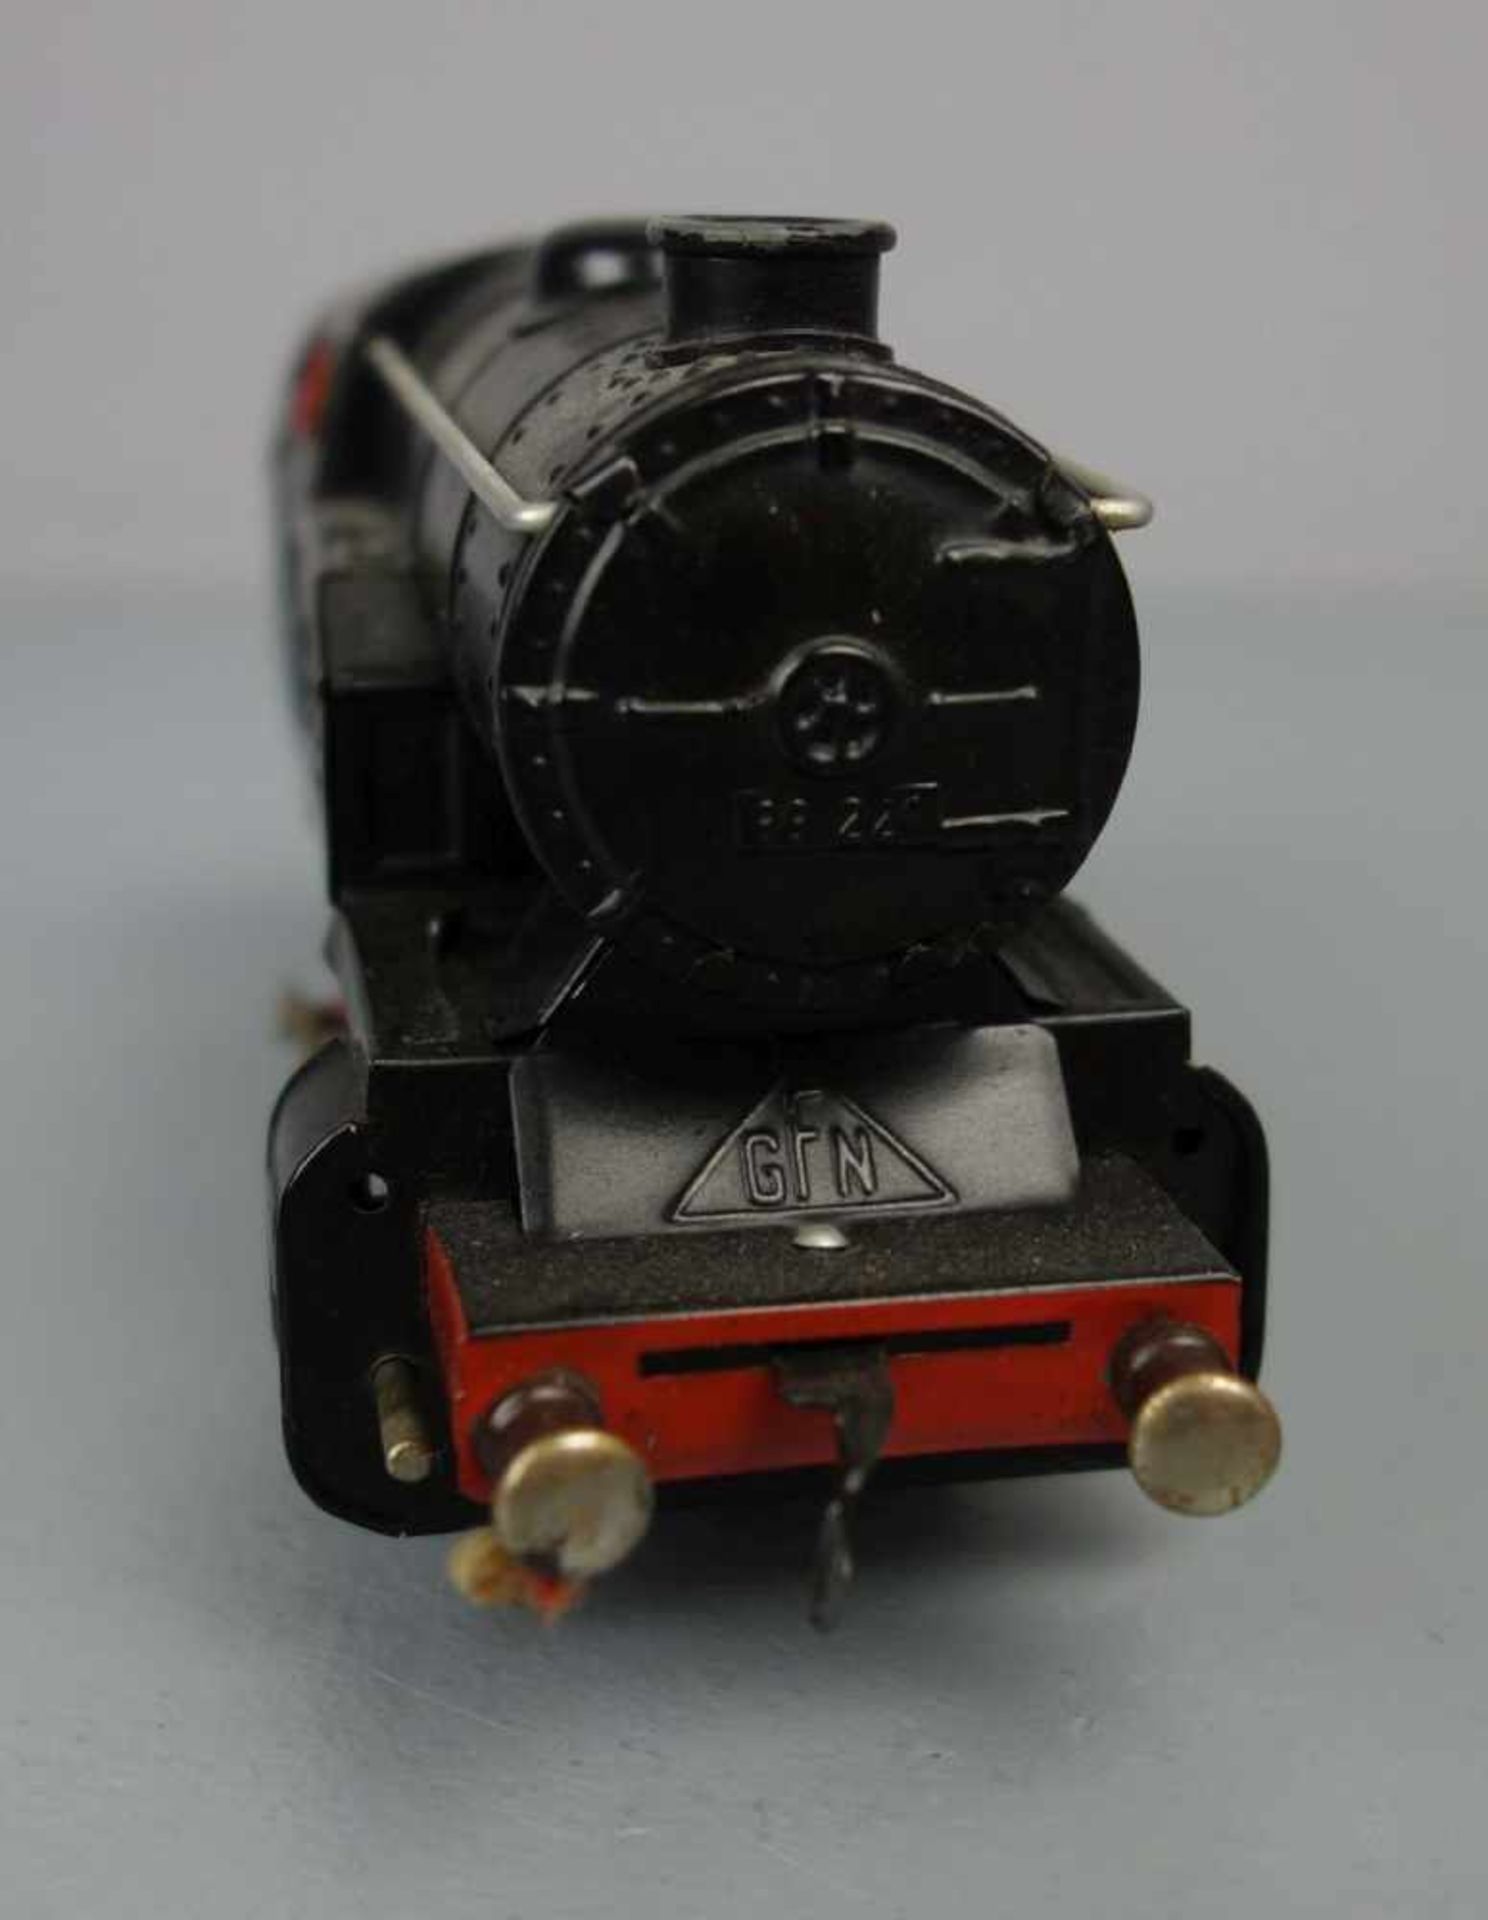 BLECHSPIELZEUG / EISENBAHN-SET: Dampflok-Set im Karton / tin toy railway, um 1950, Manufaktur - Bild 11 aus 12